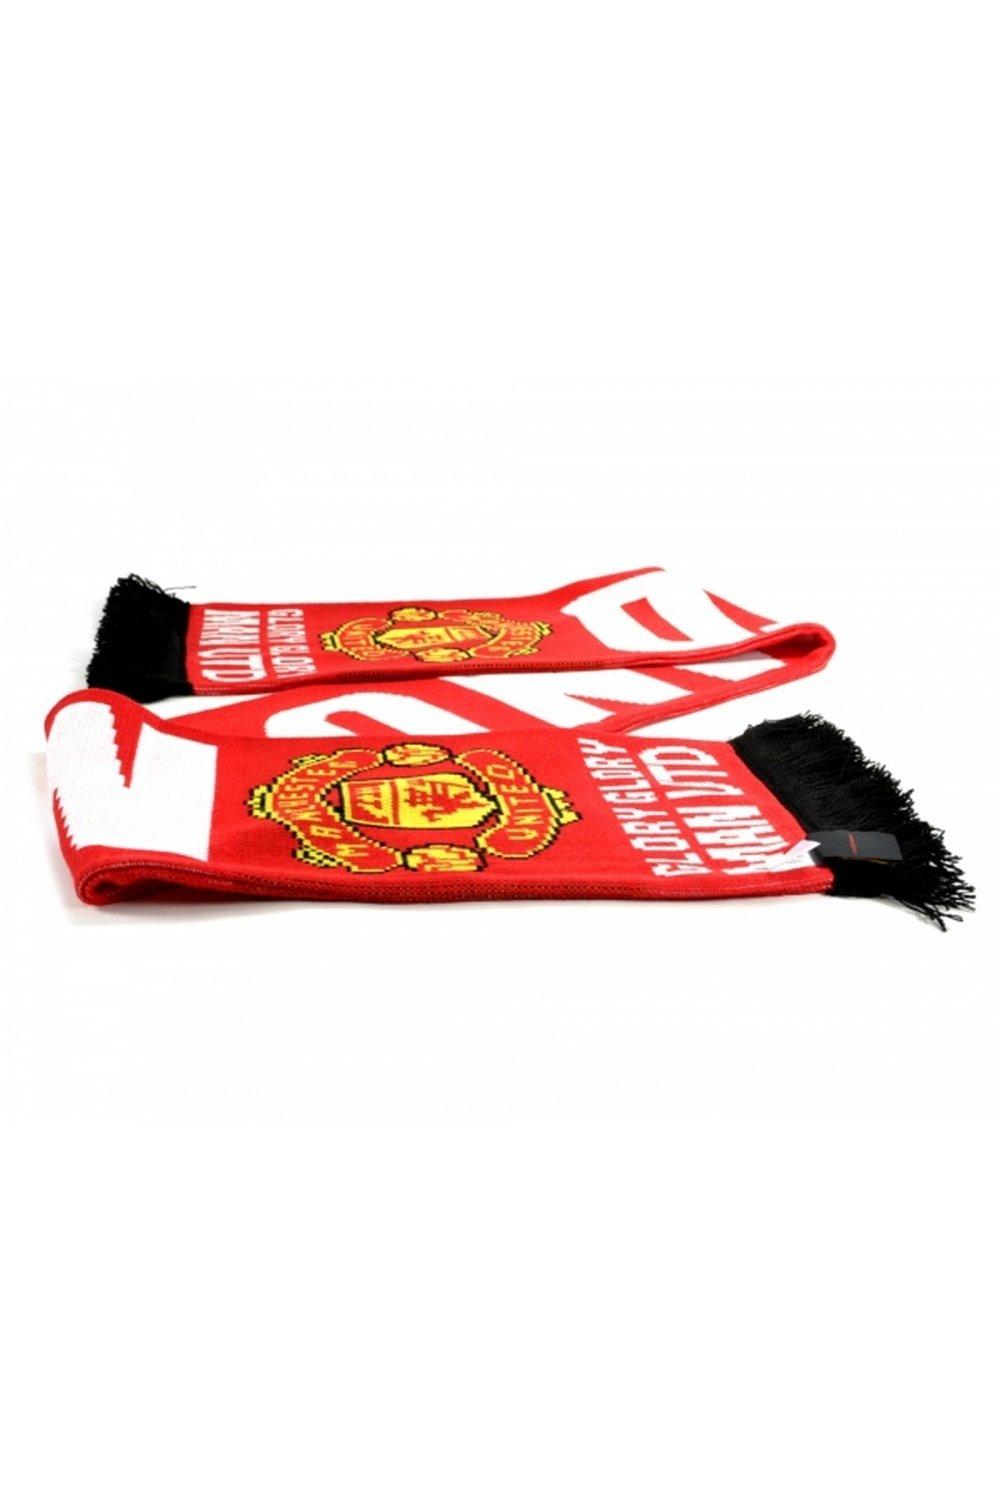 Официальный шарф Football Glory Glory Manchester United FC, мультиколор цена и фото